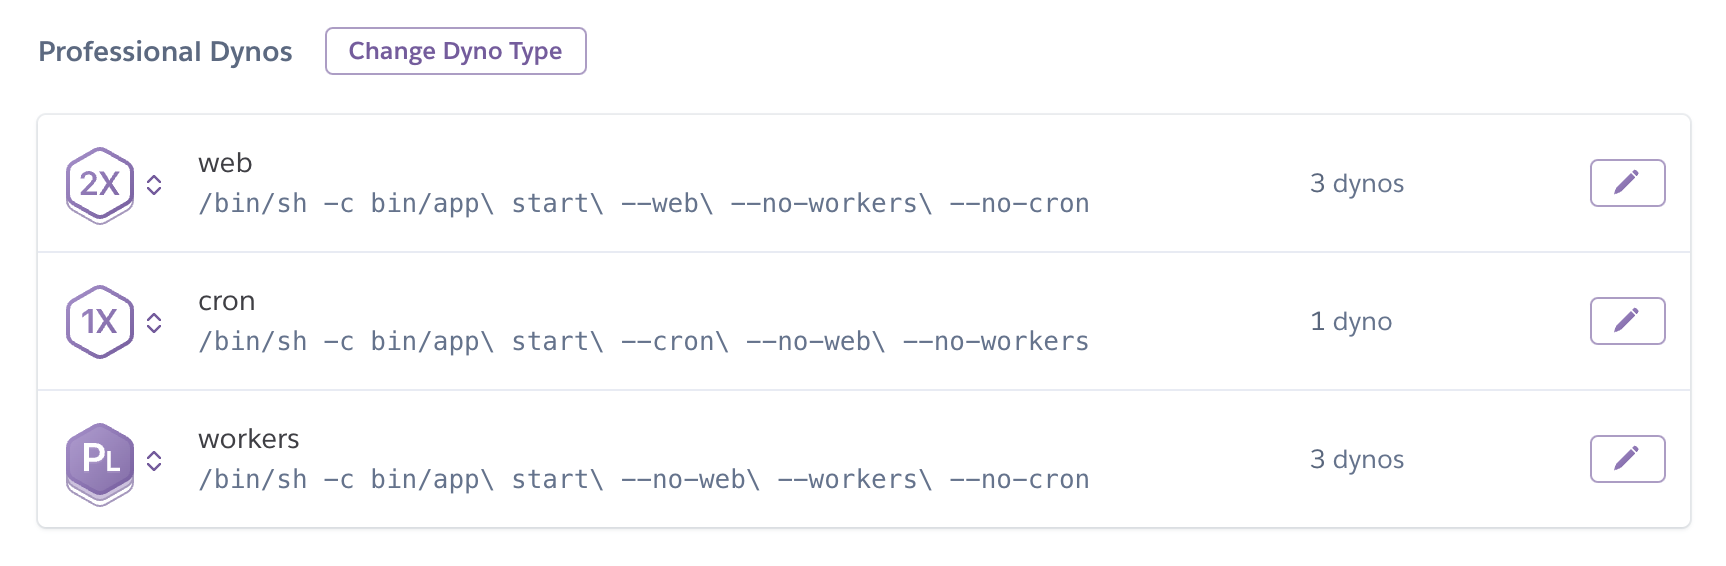 Heroku dynos now split between web, worker and cron